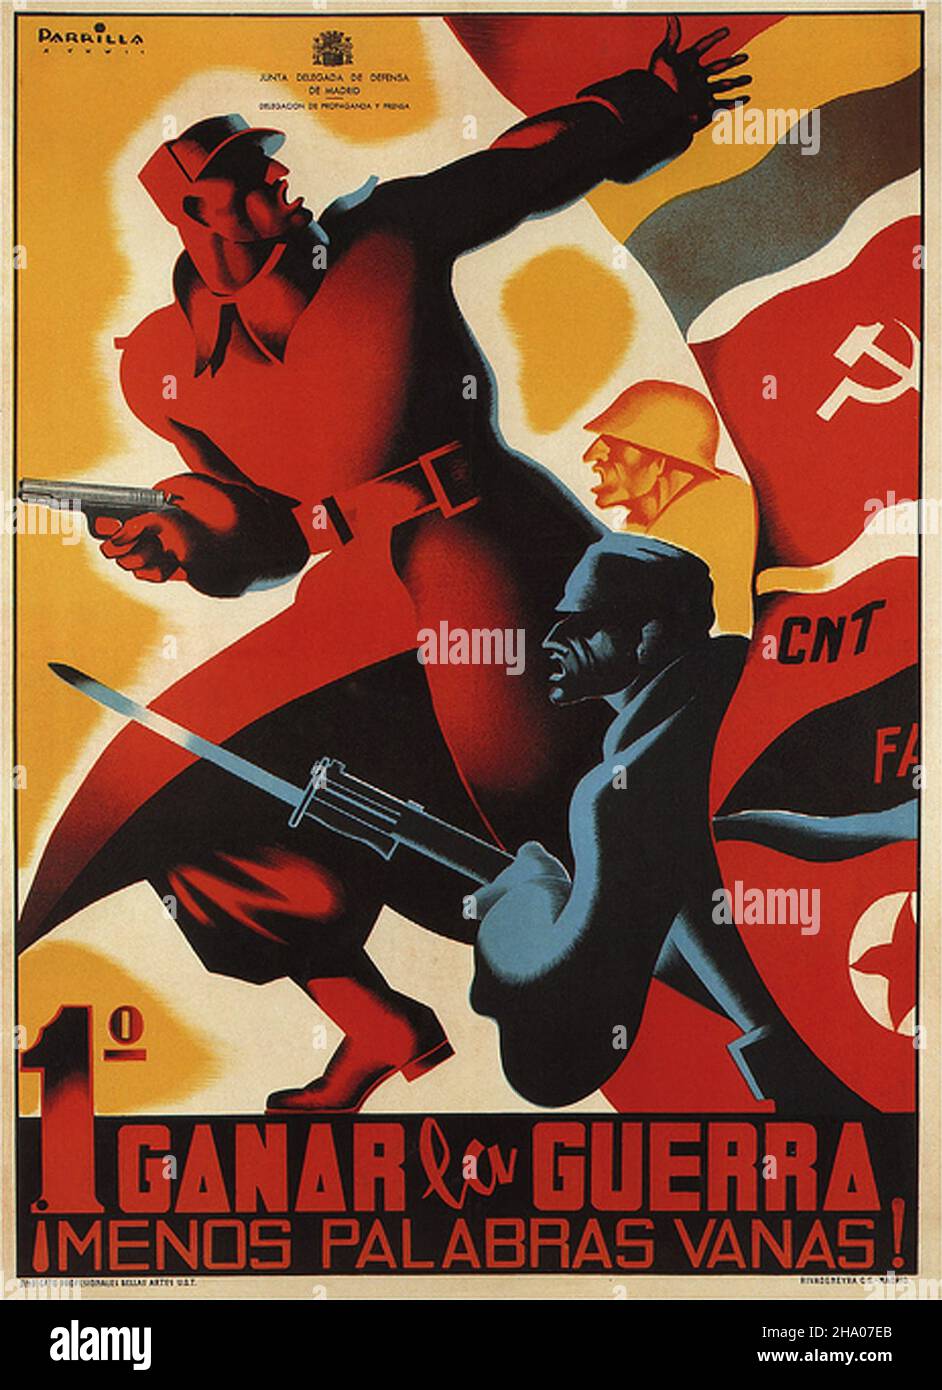 Ganar la guerra 2 - affiche de propagande sur la guerre civile espagnole (Guerra civil Española) Banque D'Images